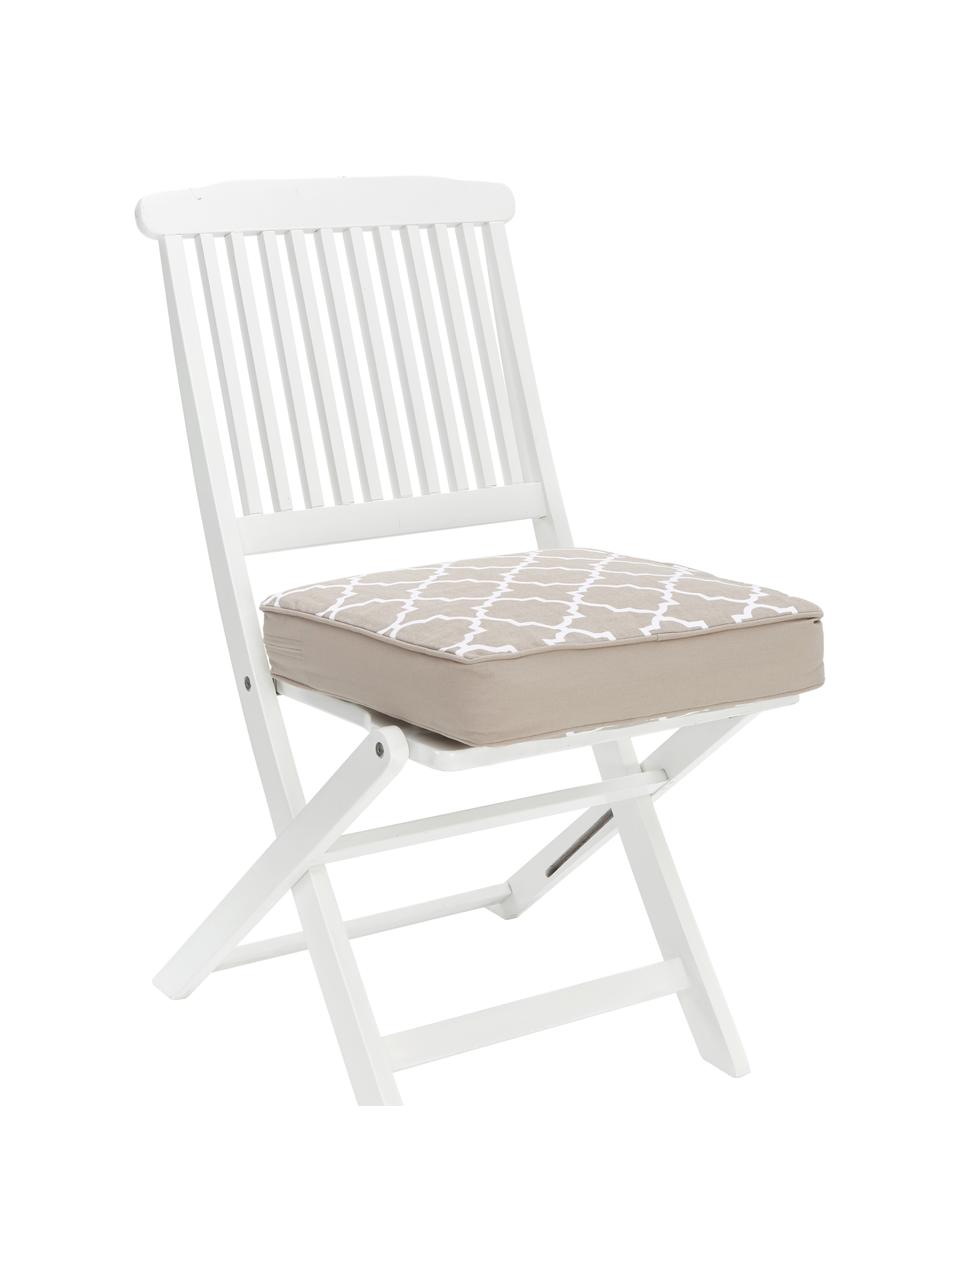 Cuscino sedia alto taupe/bianco Lana, Rivestimento: 100% cotone, Beige, Larg. 40 x Lung. 40 cm